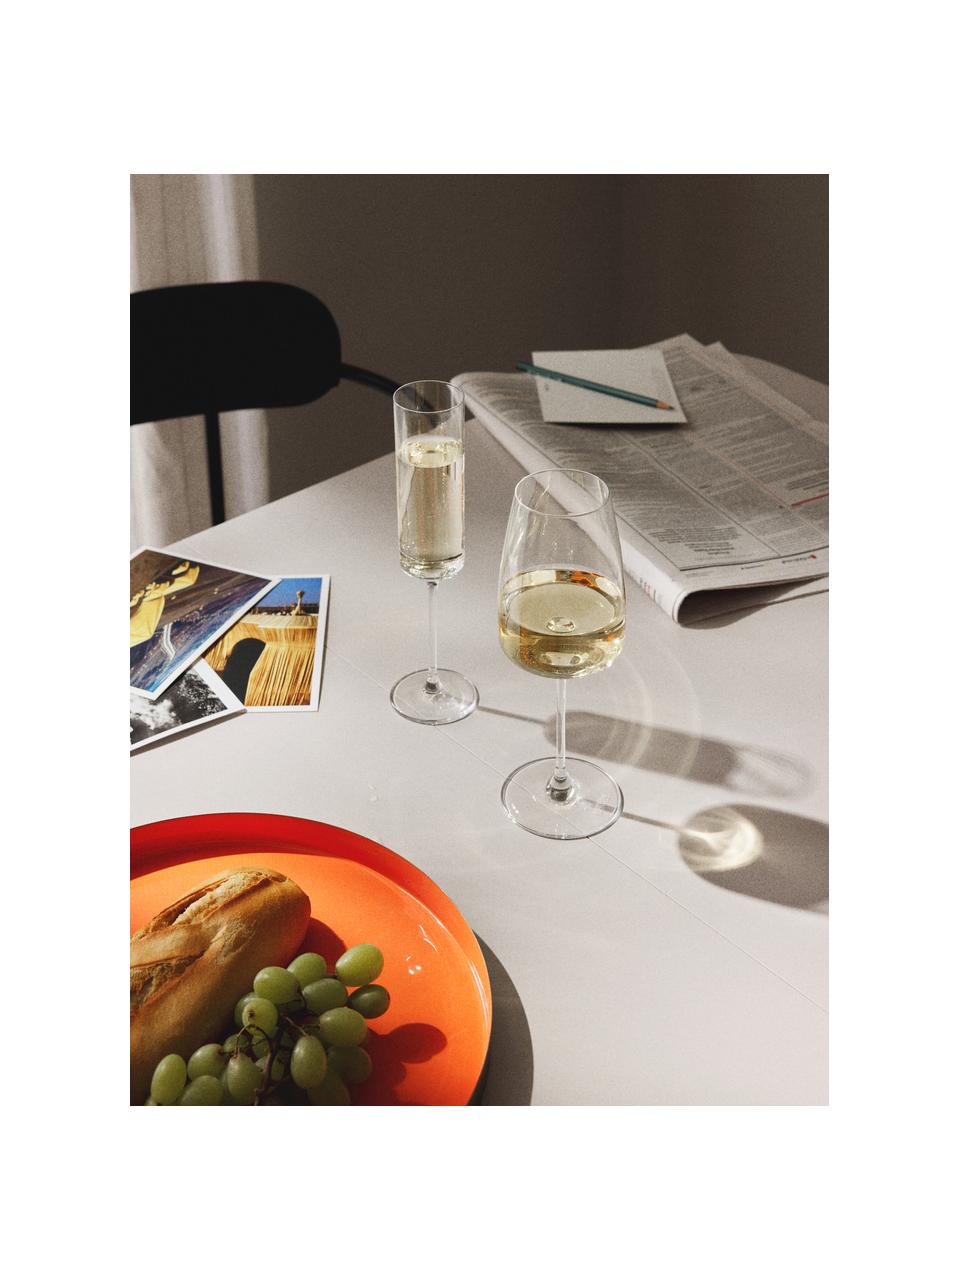 Kristall-Weißweingläser Lucien, 4 Stück, Kristallglas, Transparent, Ø 8 x H 22 cm, 420 ml